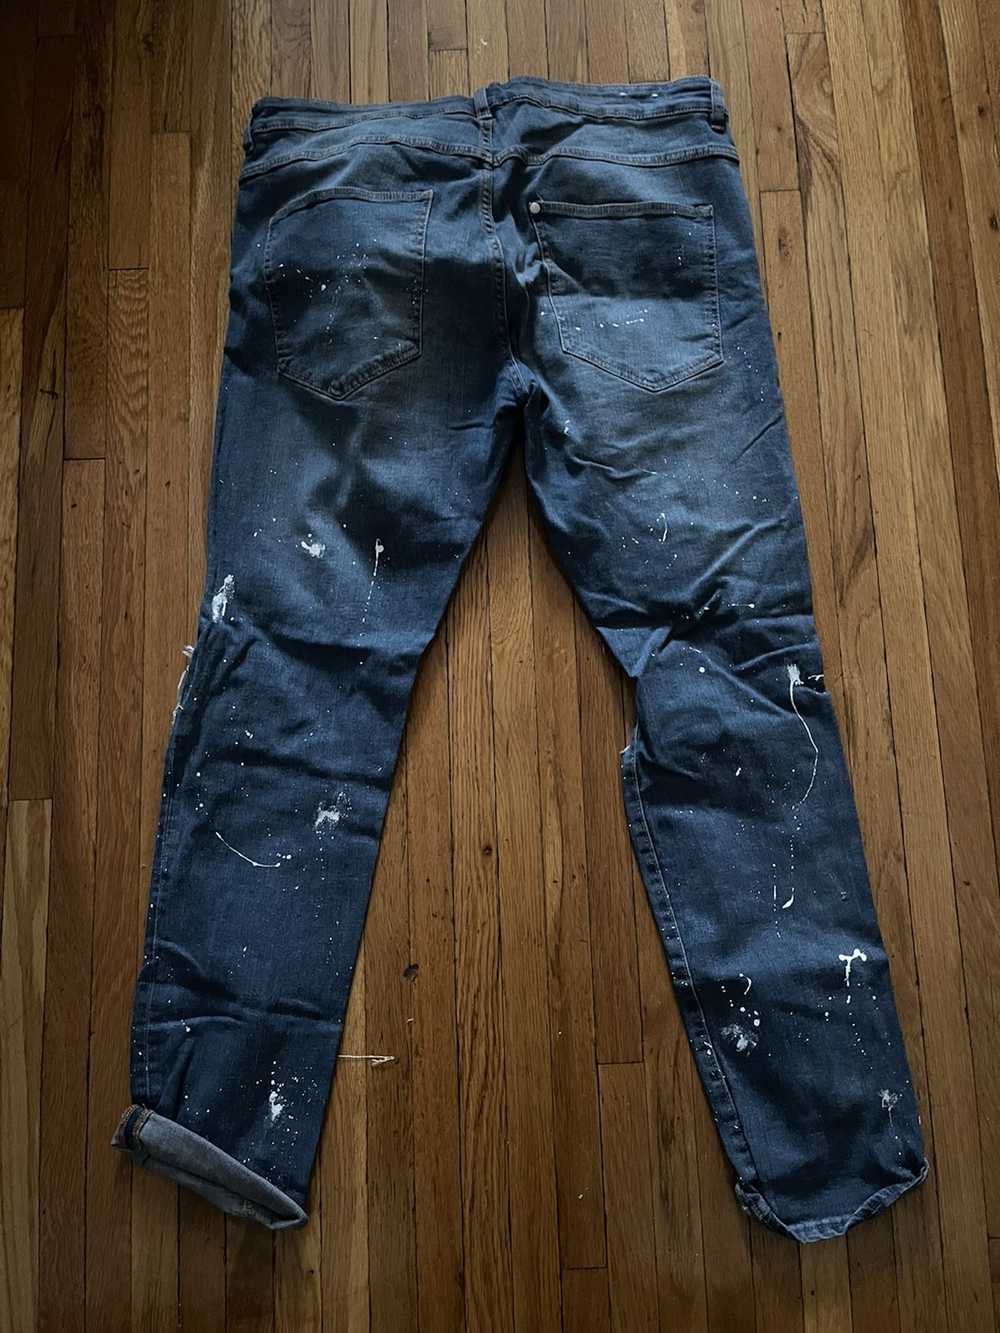 Custom Custom paint splat jeans - image 1